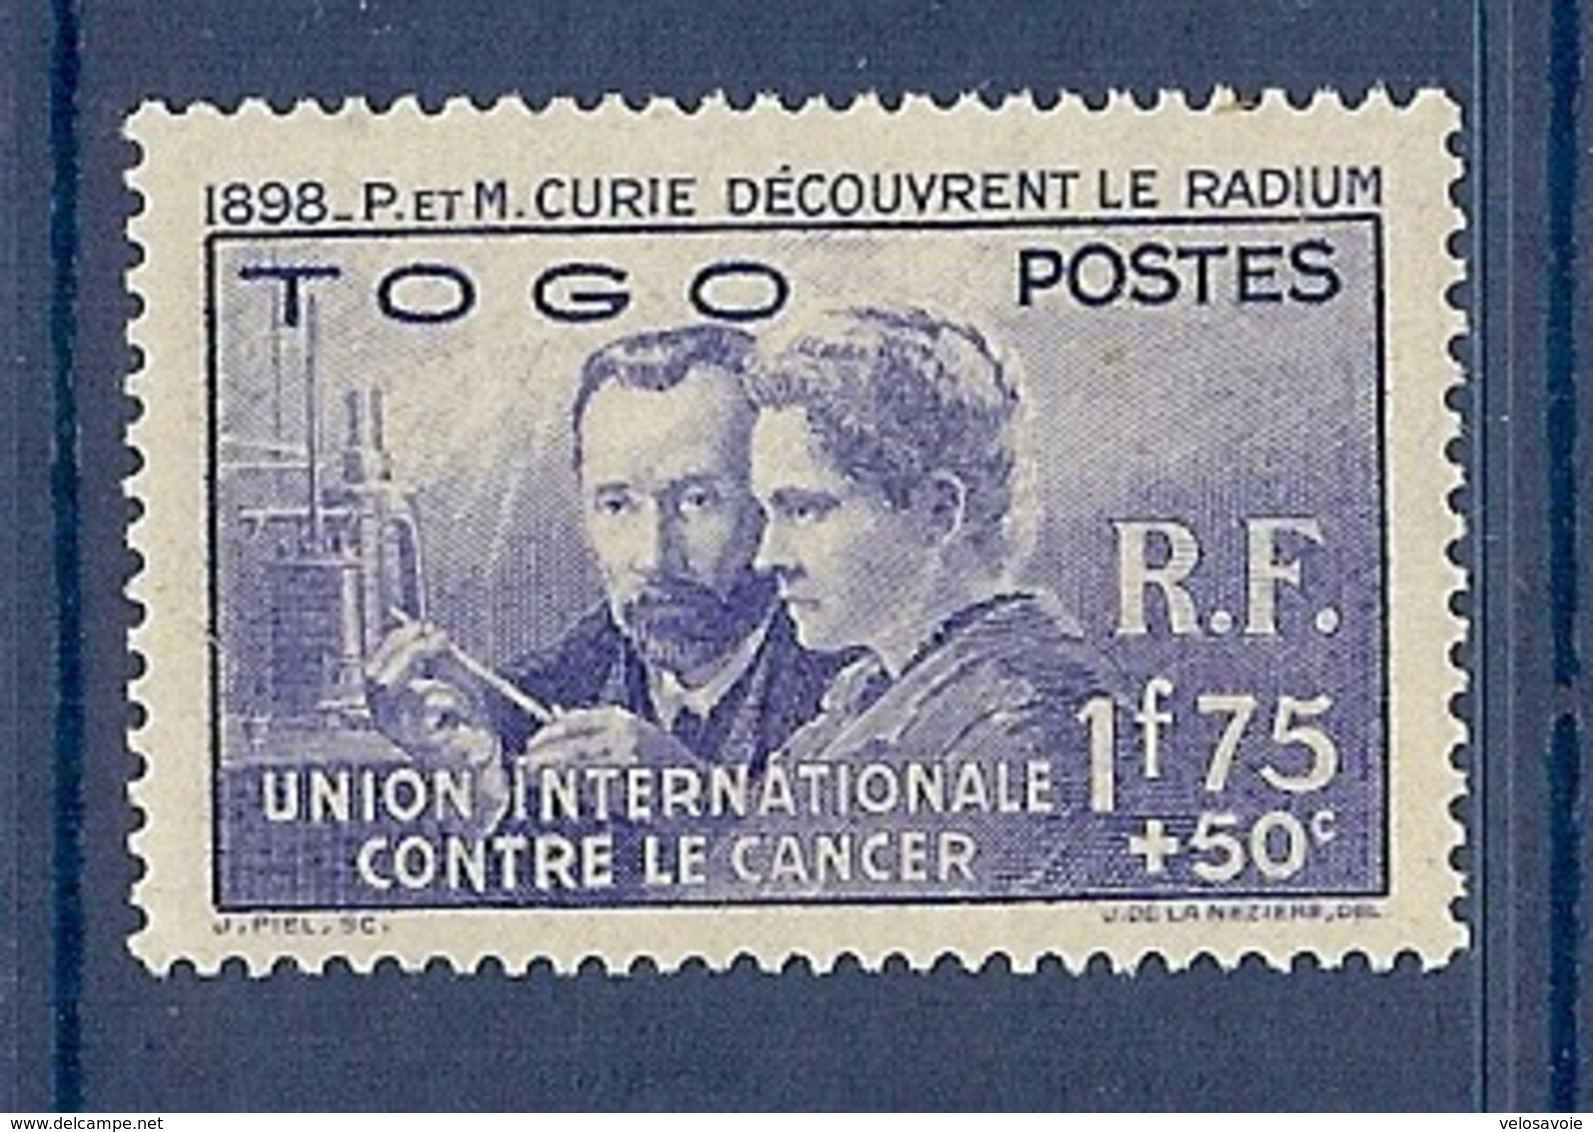 TOGO N° 171 PIERRE ET MARIE CURIE * - Unused Stamps